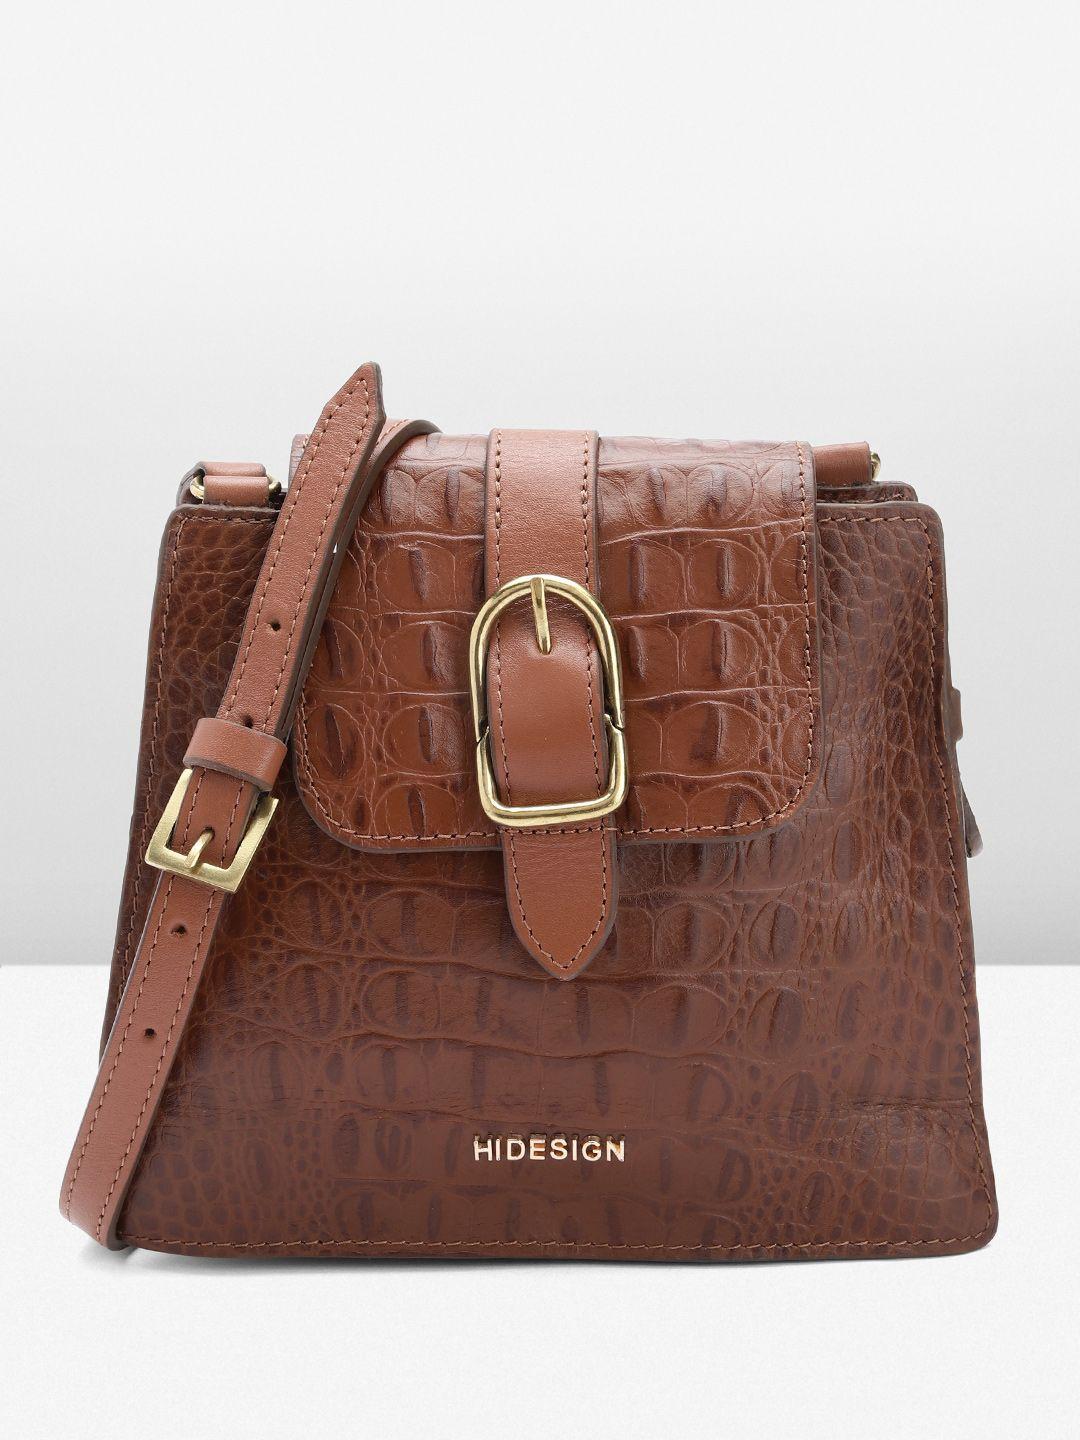 Hidesign Croc-Textured Leather Structured Sling Bag